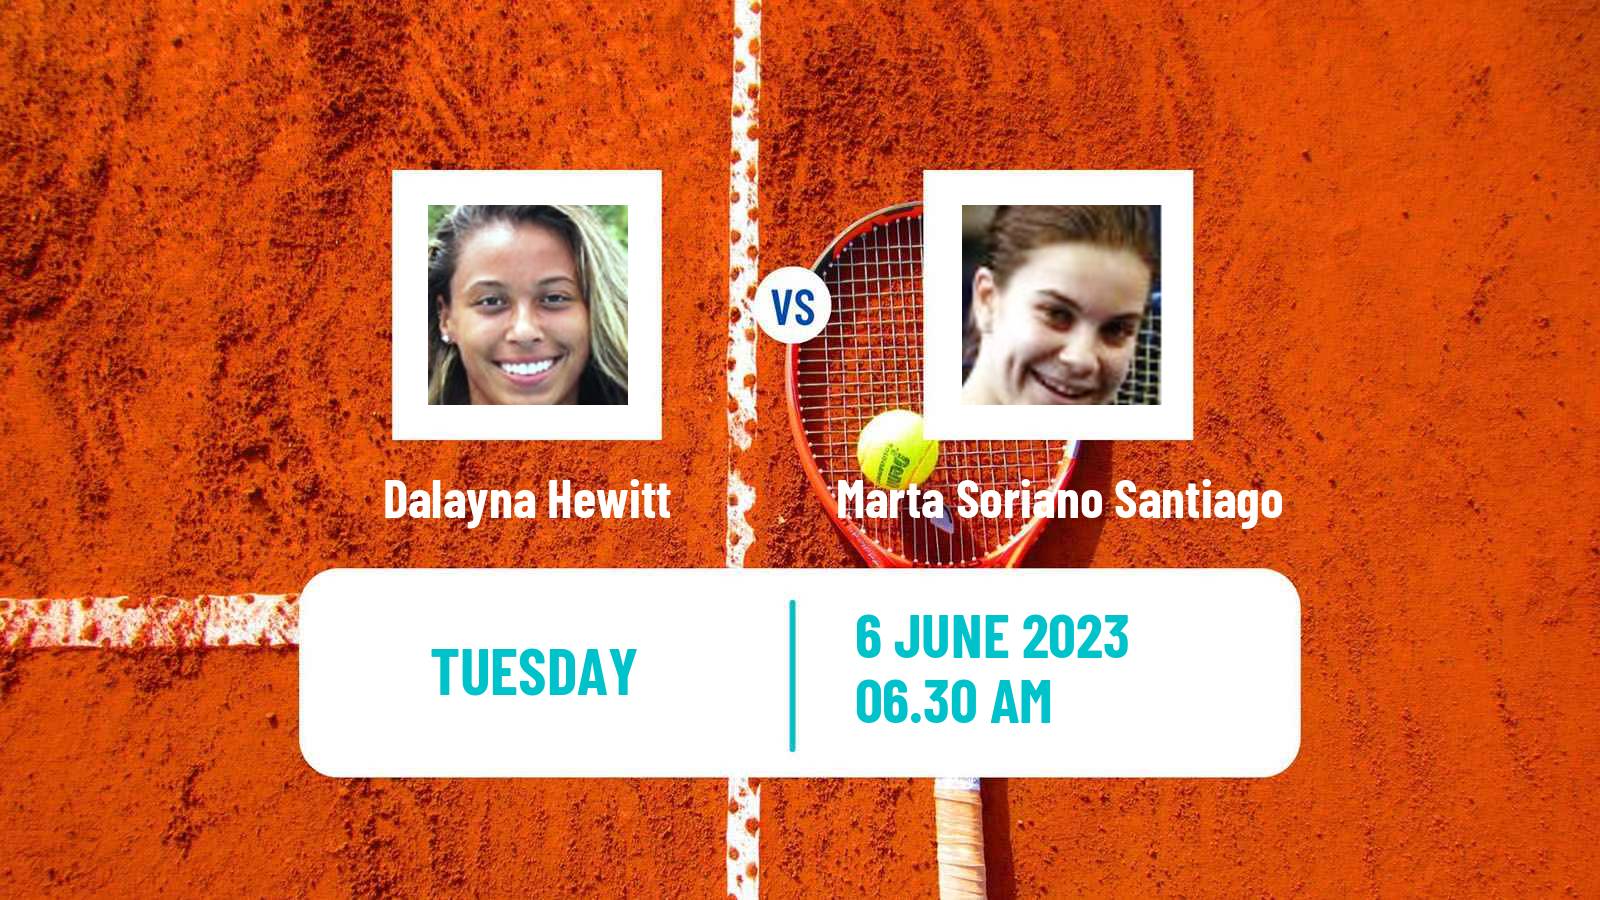 Tennis ITF W25 Madrid Women Dalayna Hewitt - Marta Soriano Santiago